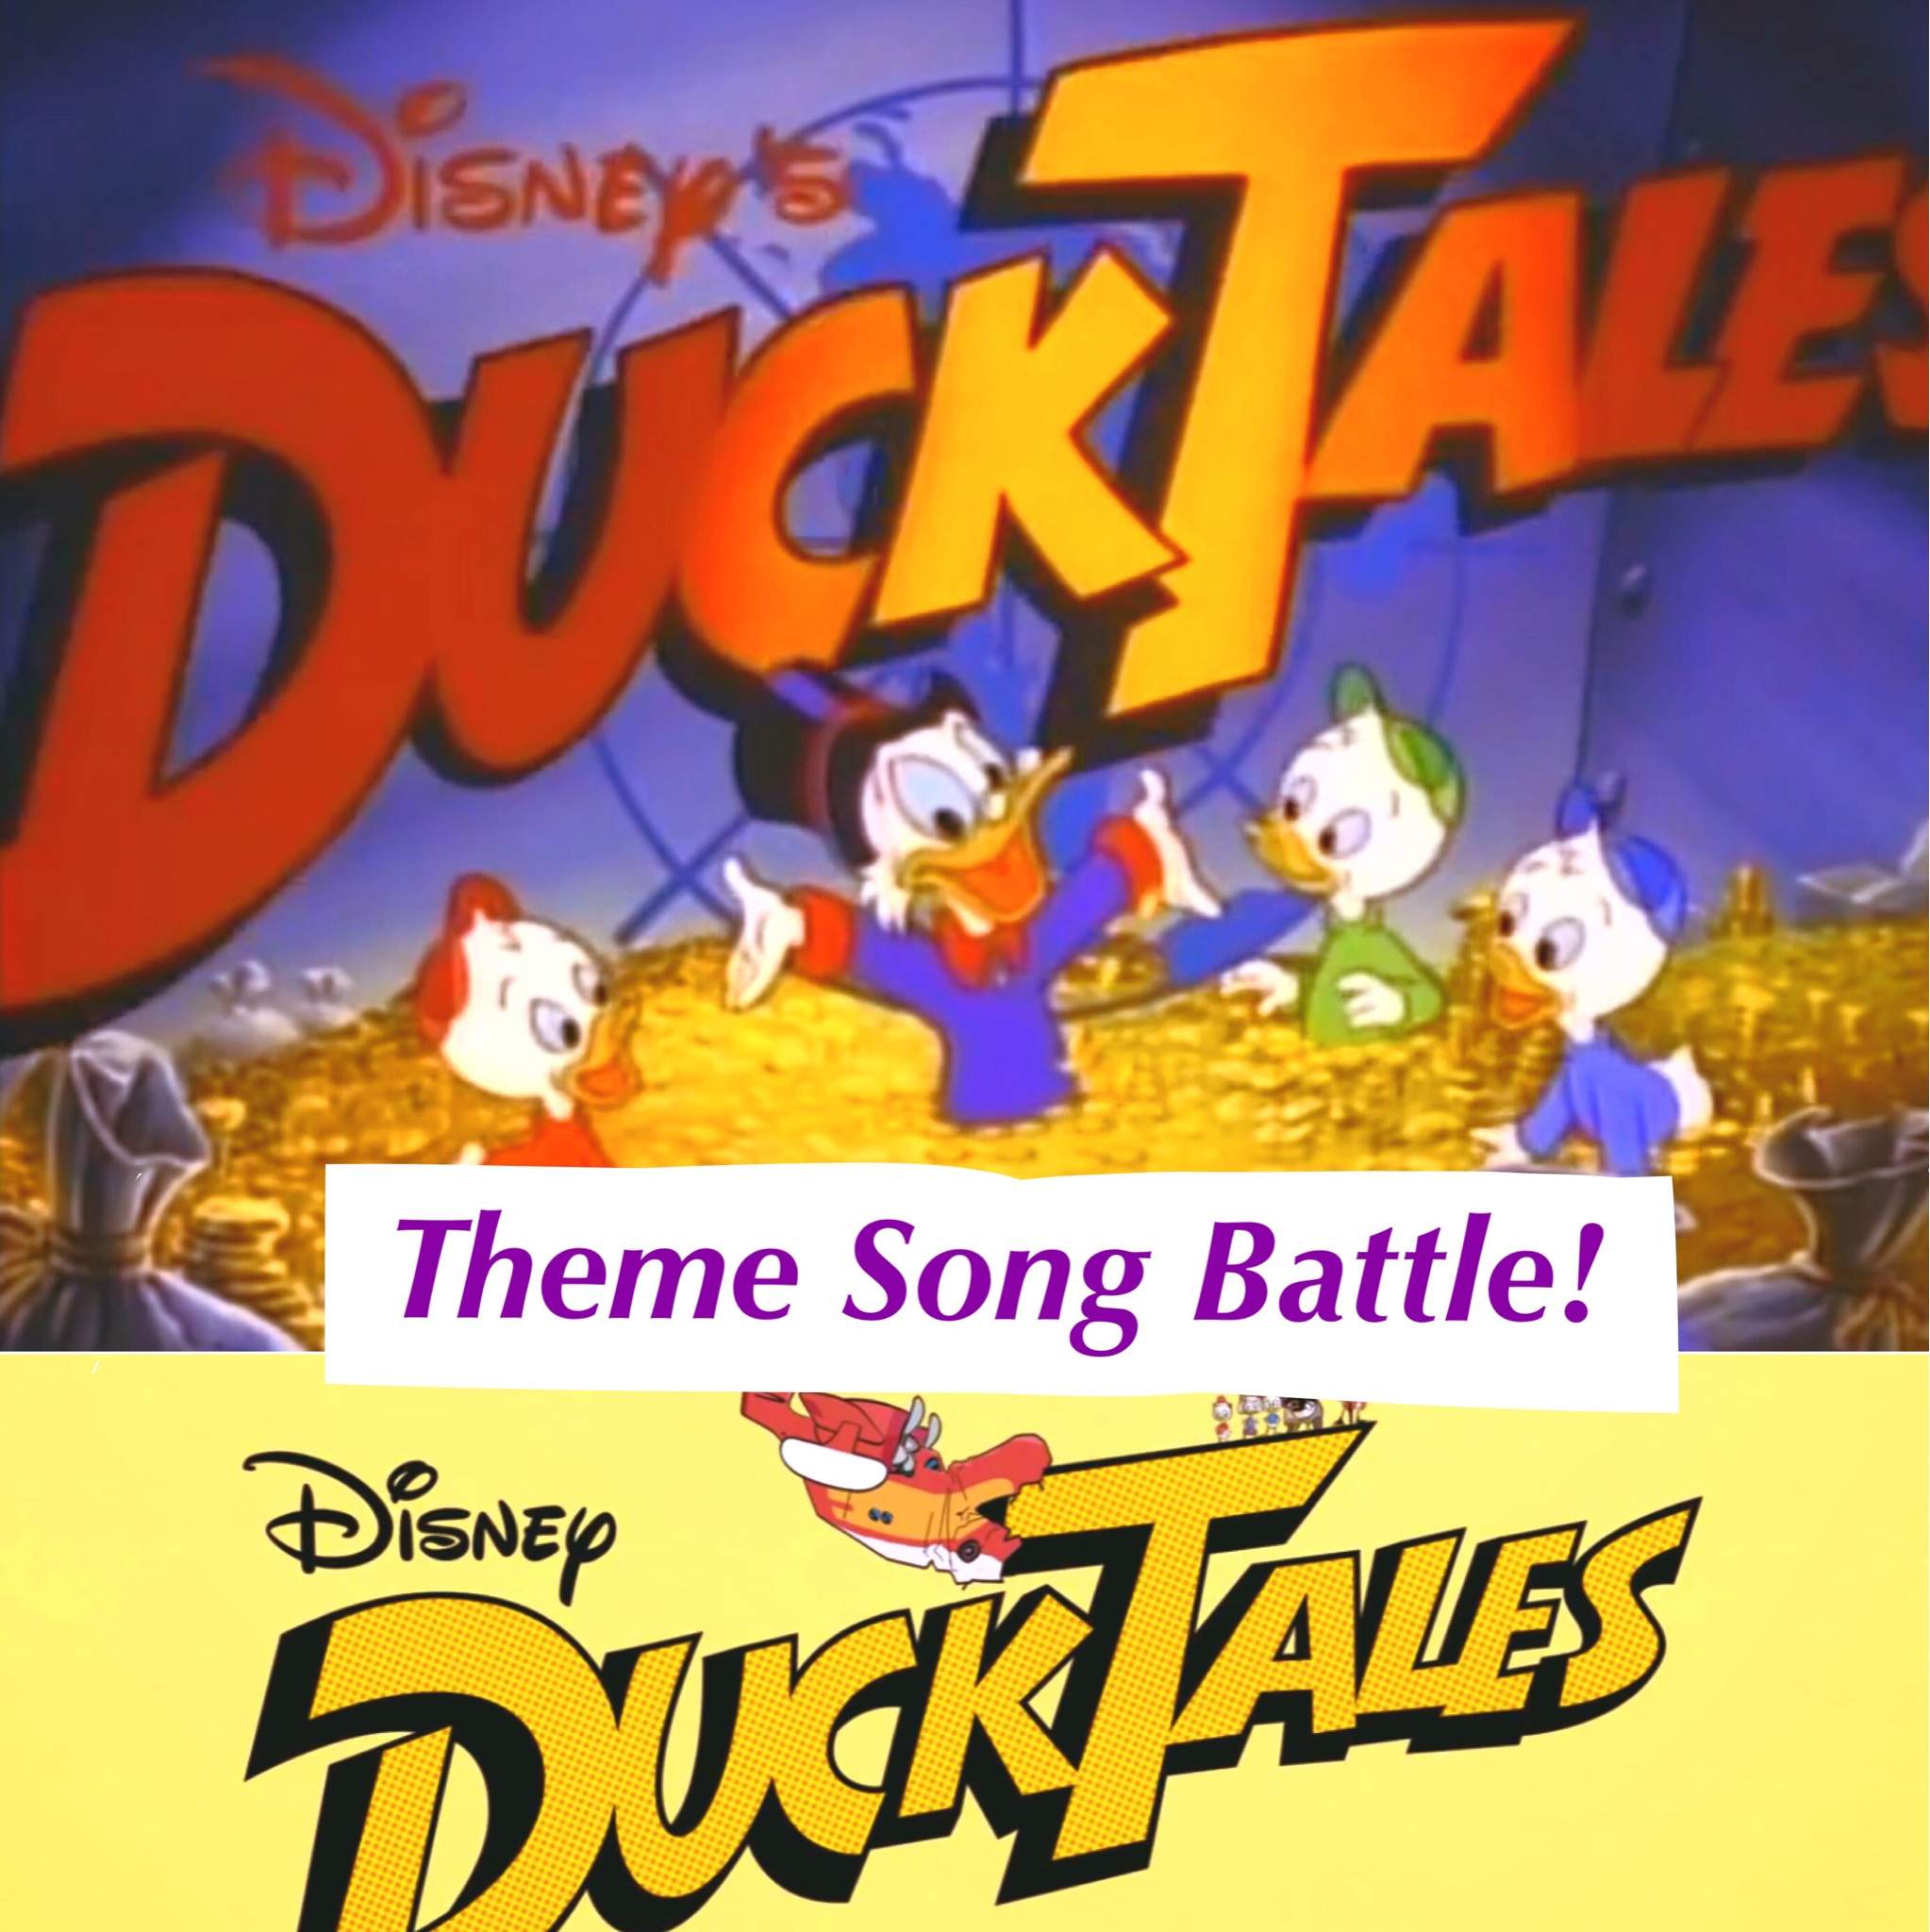 the ducktales theme song lyrics